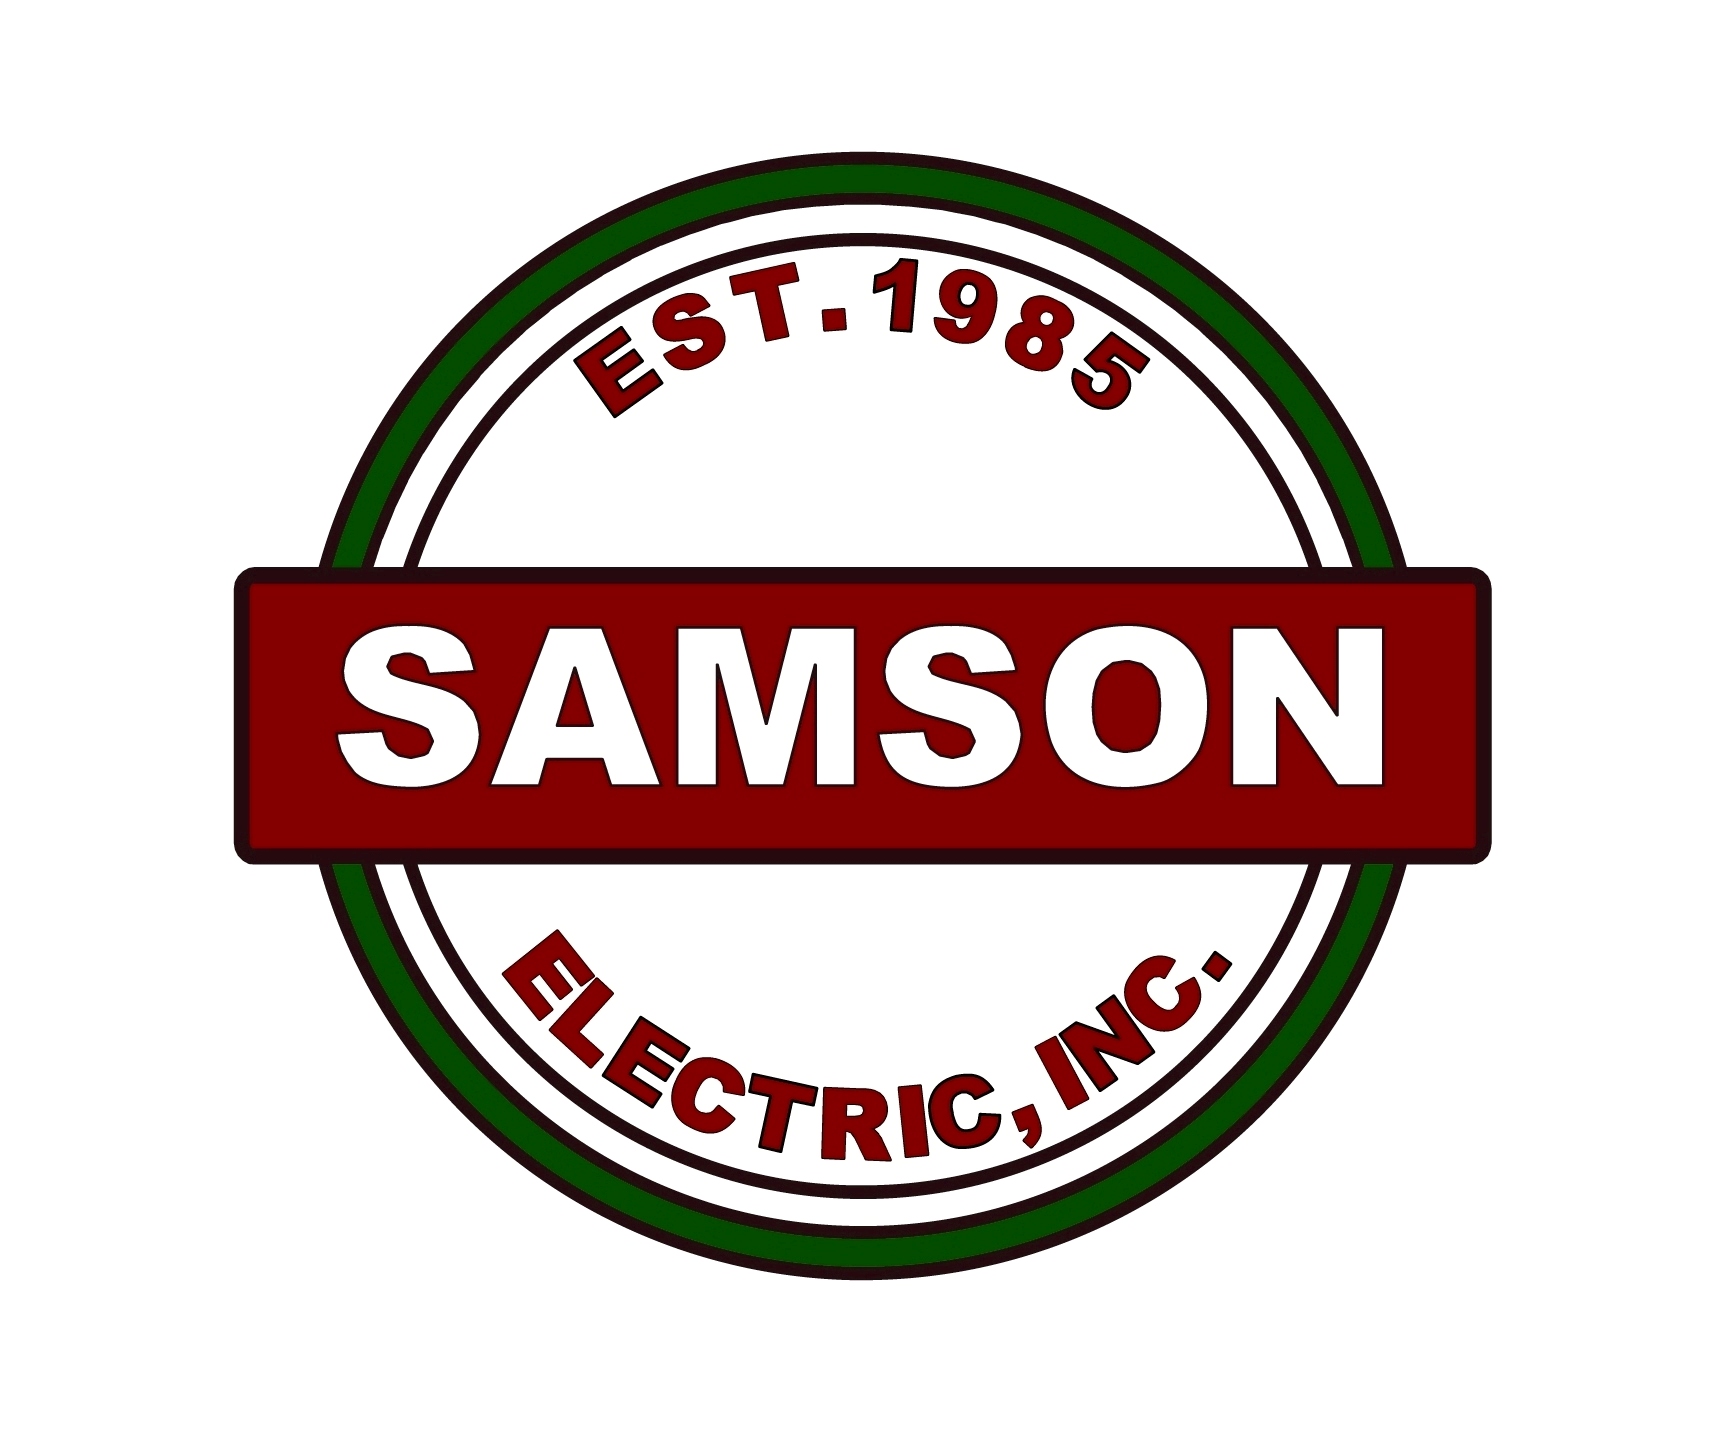 Samson New637430860396692073